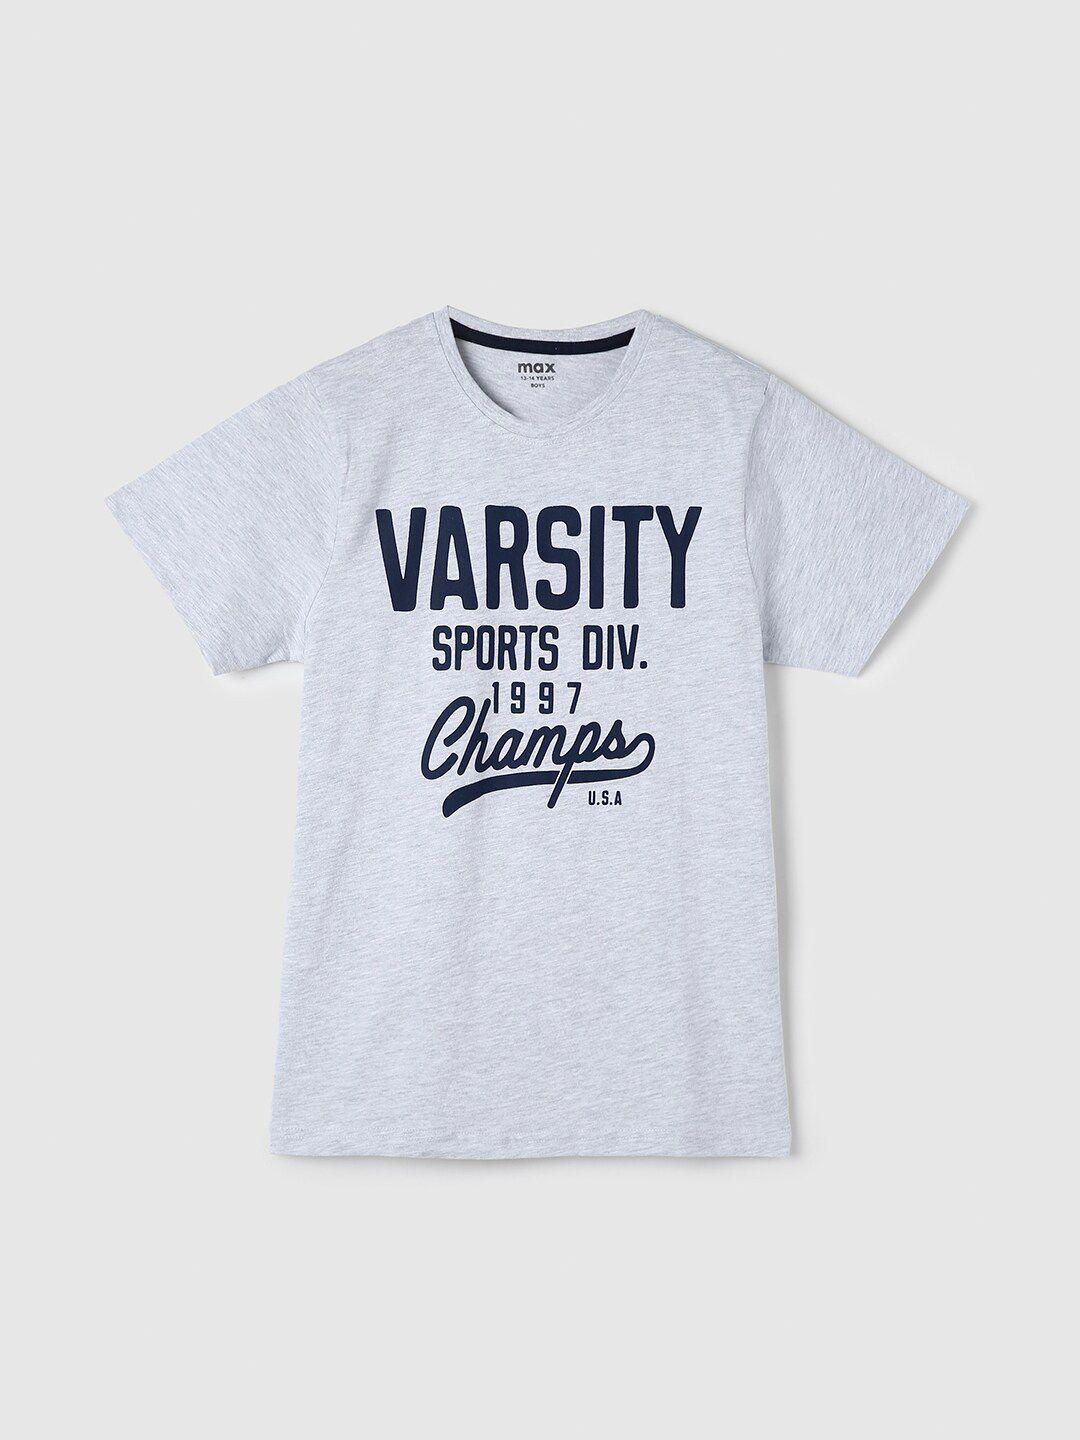 max boys grey & navy blue typography printed cotton t-shirt